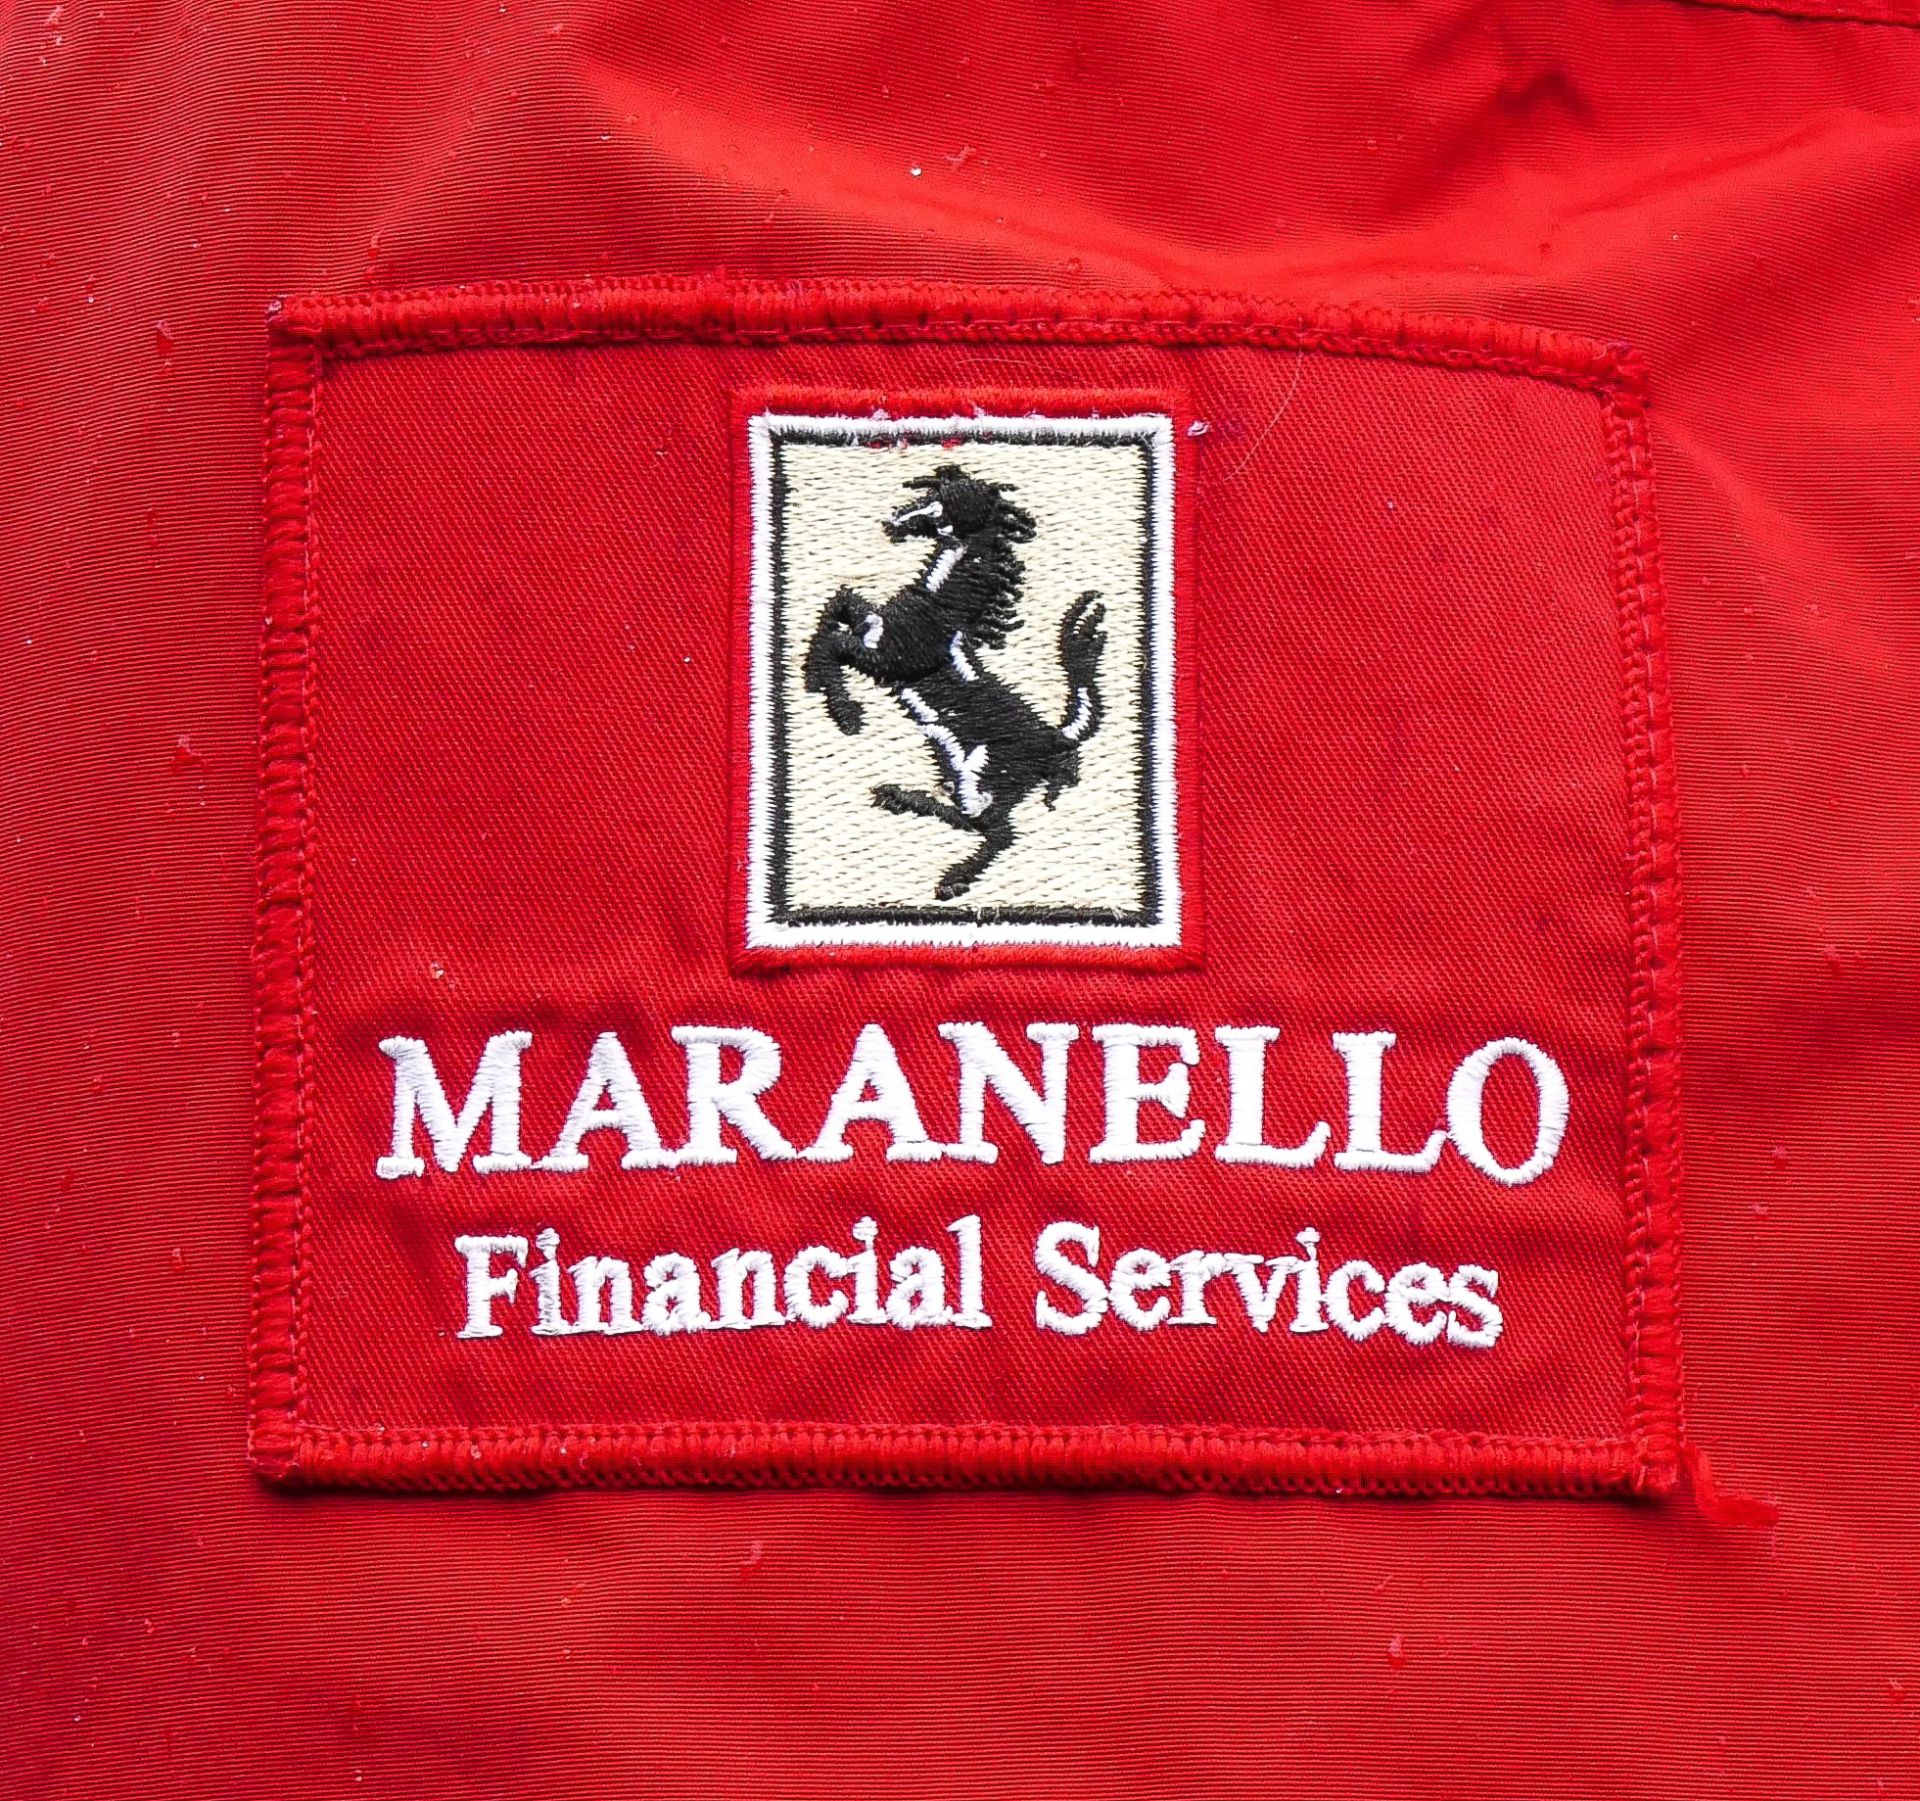 Ferrari Veloqx Motorsport/Team Maranello Concessionaires team jacket, size XL, as worn during the - Image 11 of 11